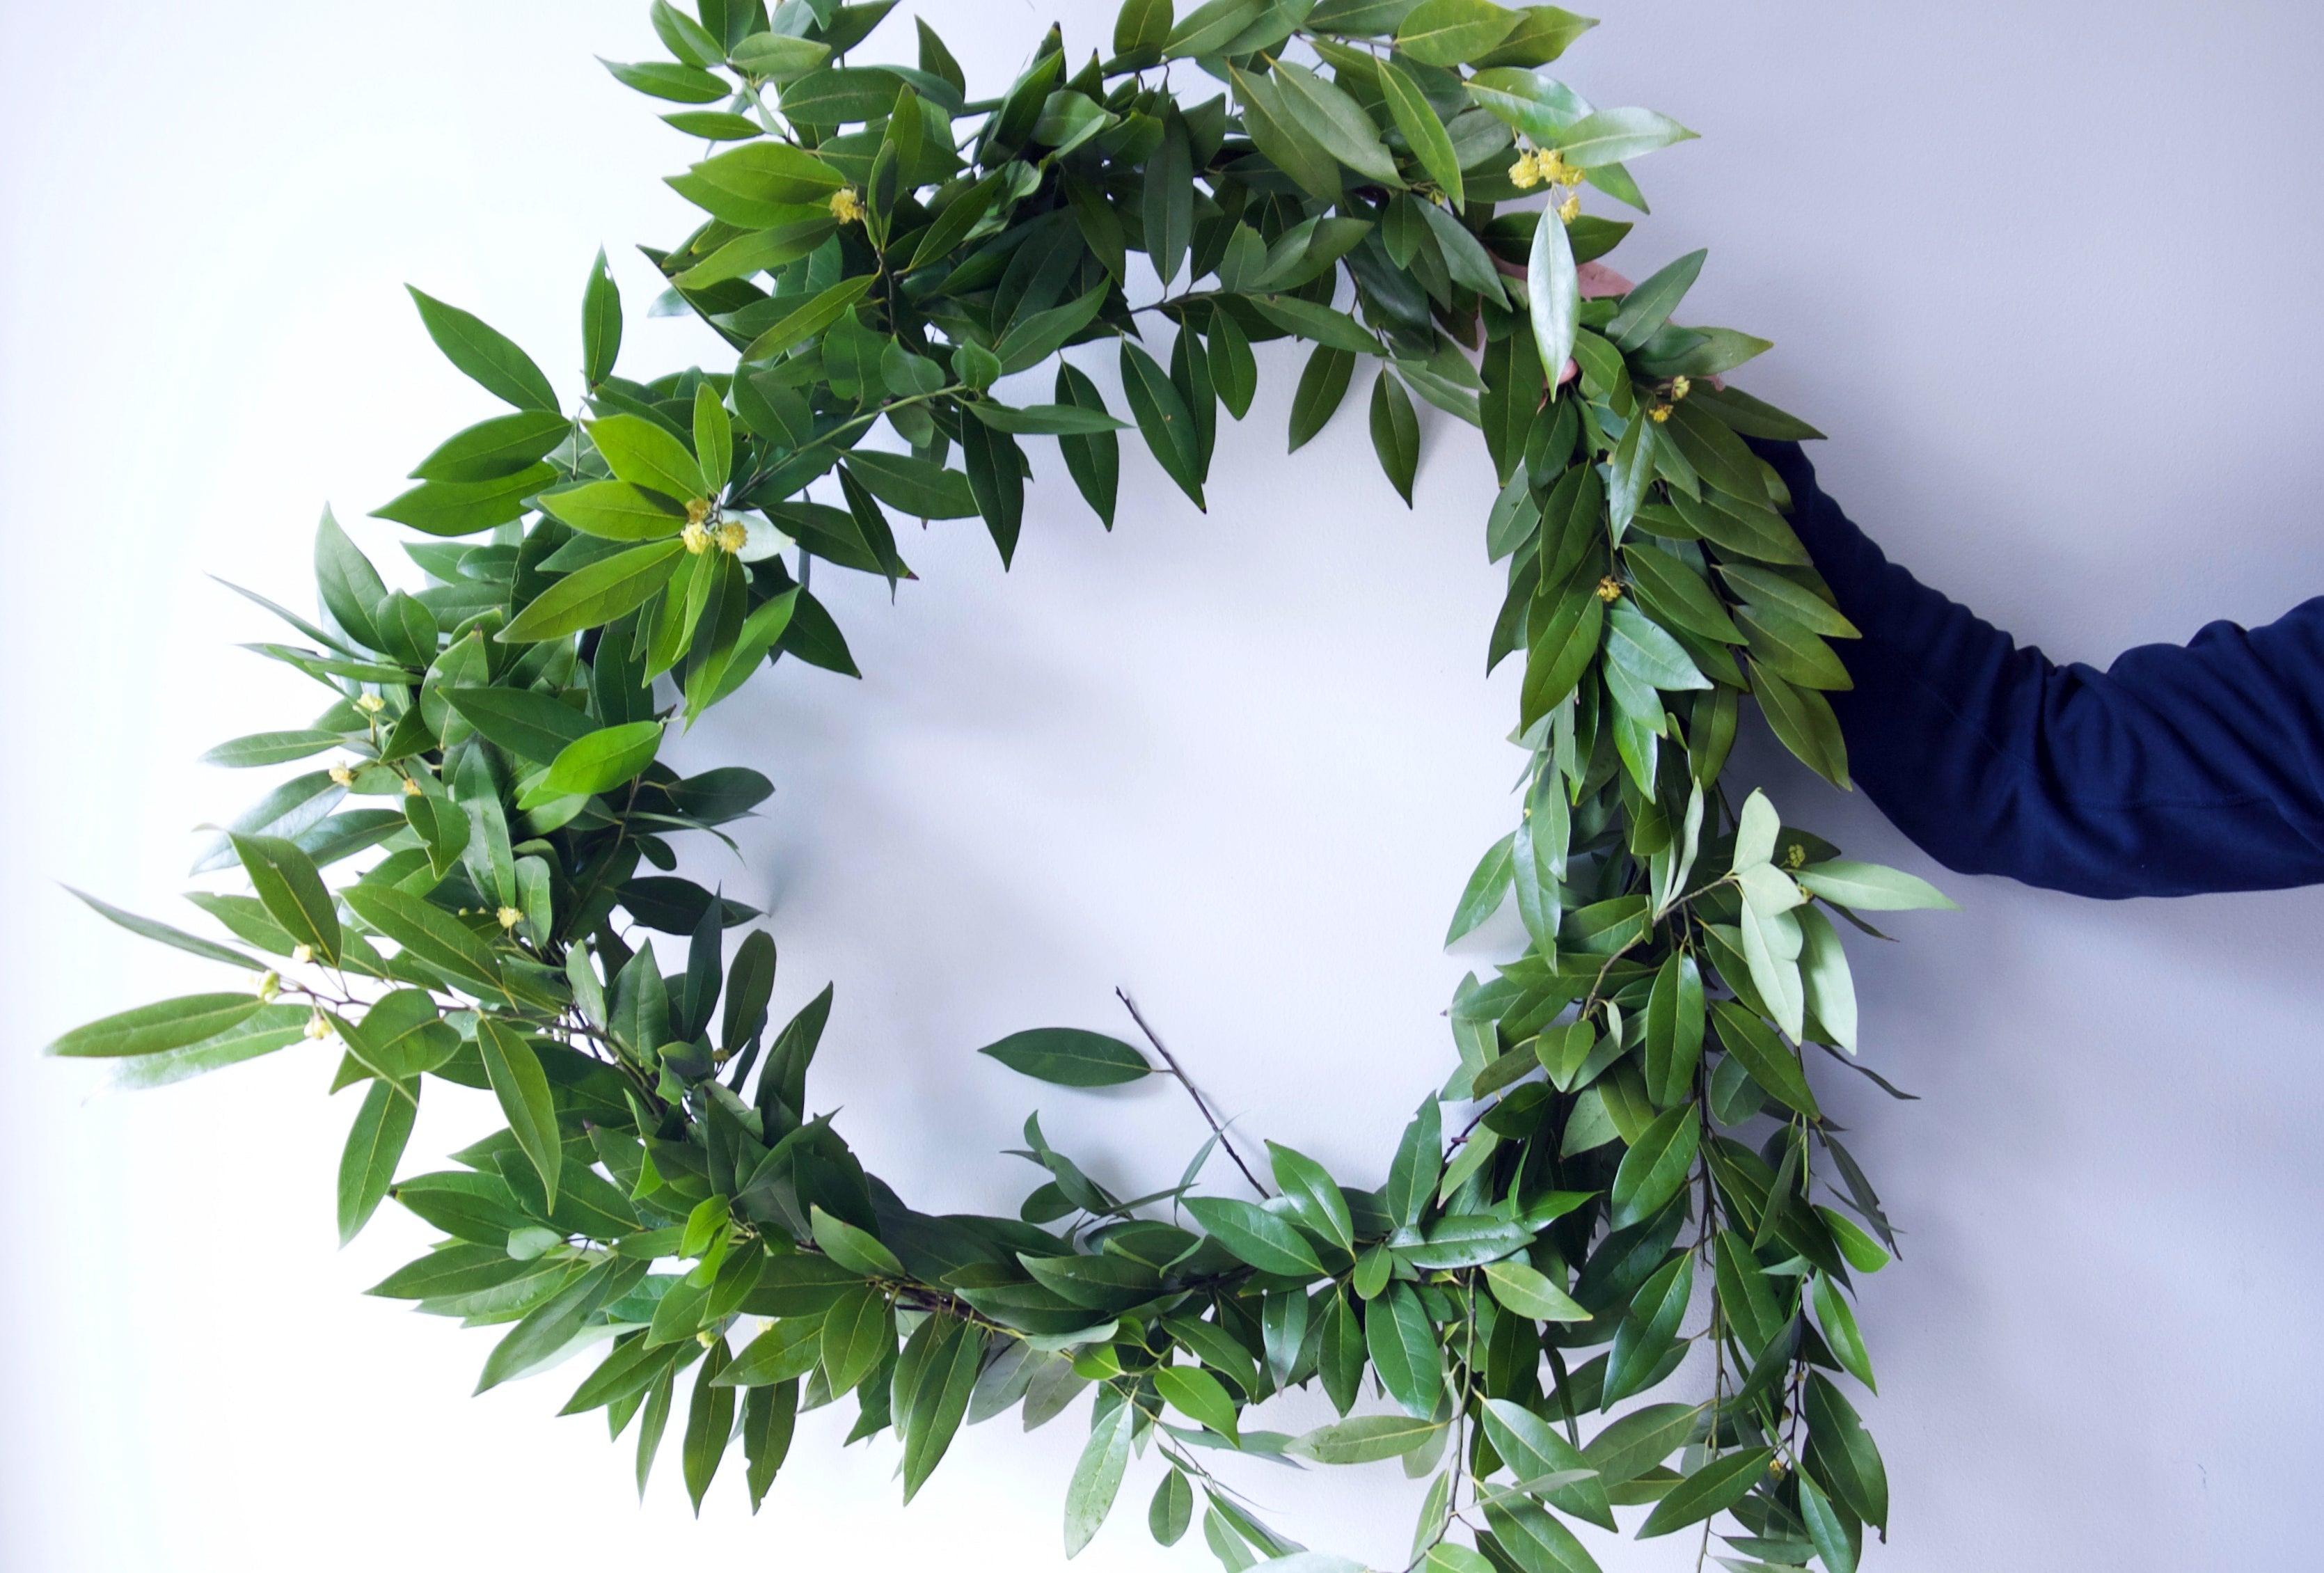 Bay wreath | wreath workshops portland oregon | send wreaths vancouver washington